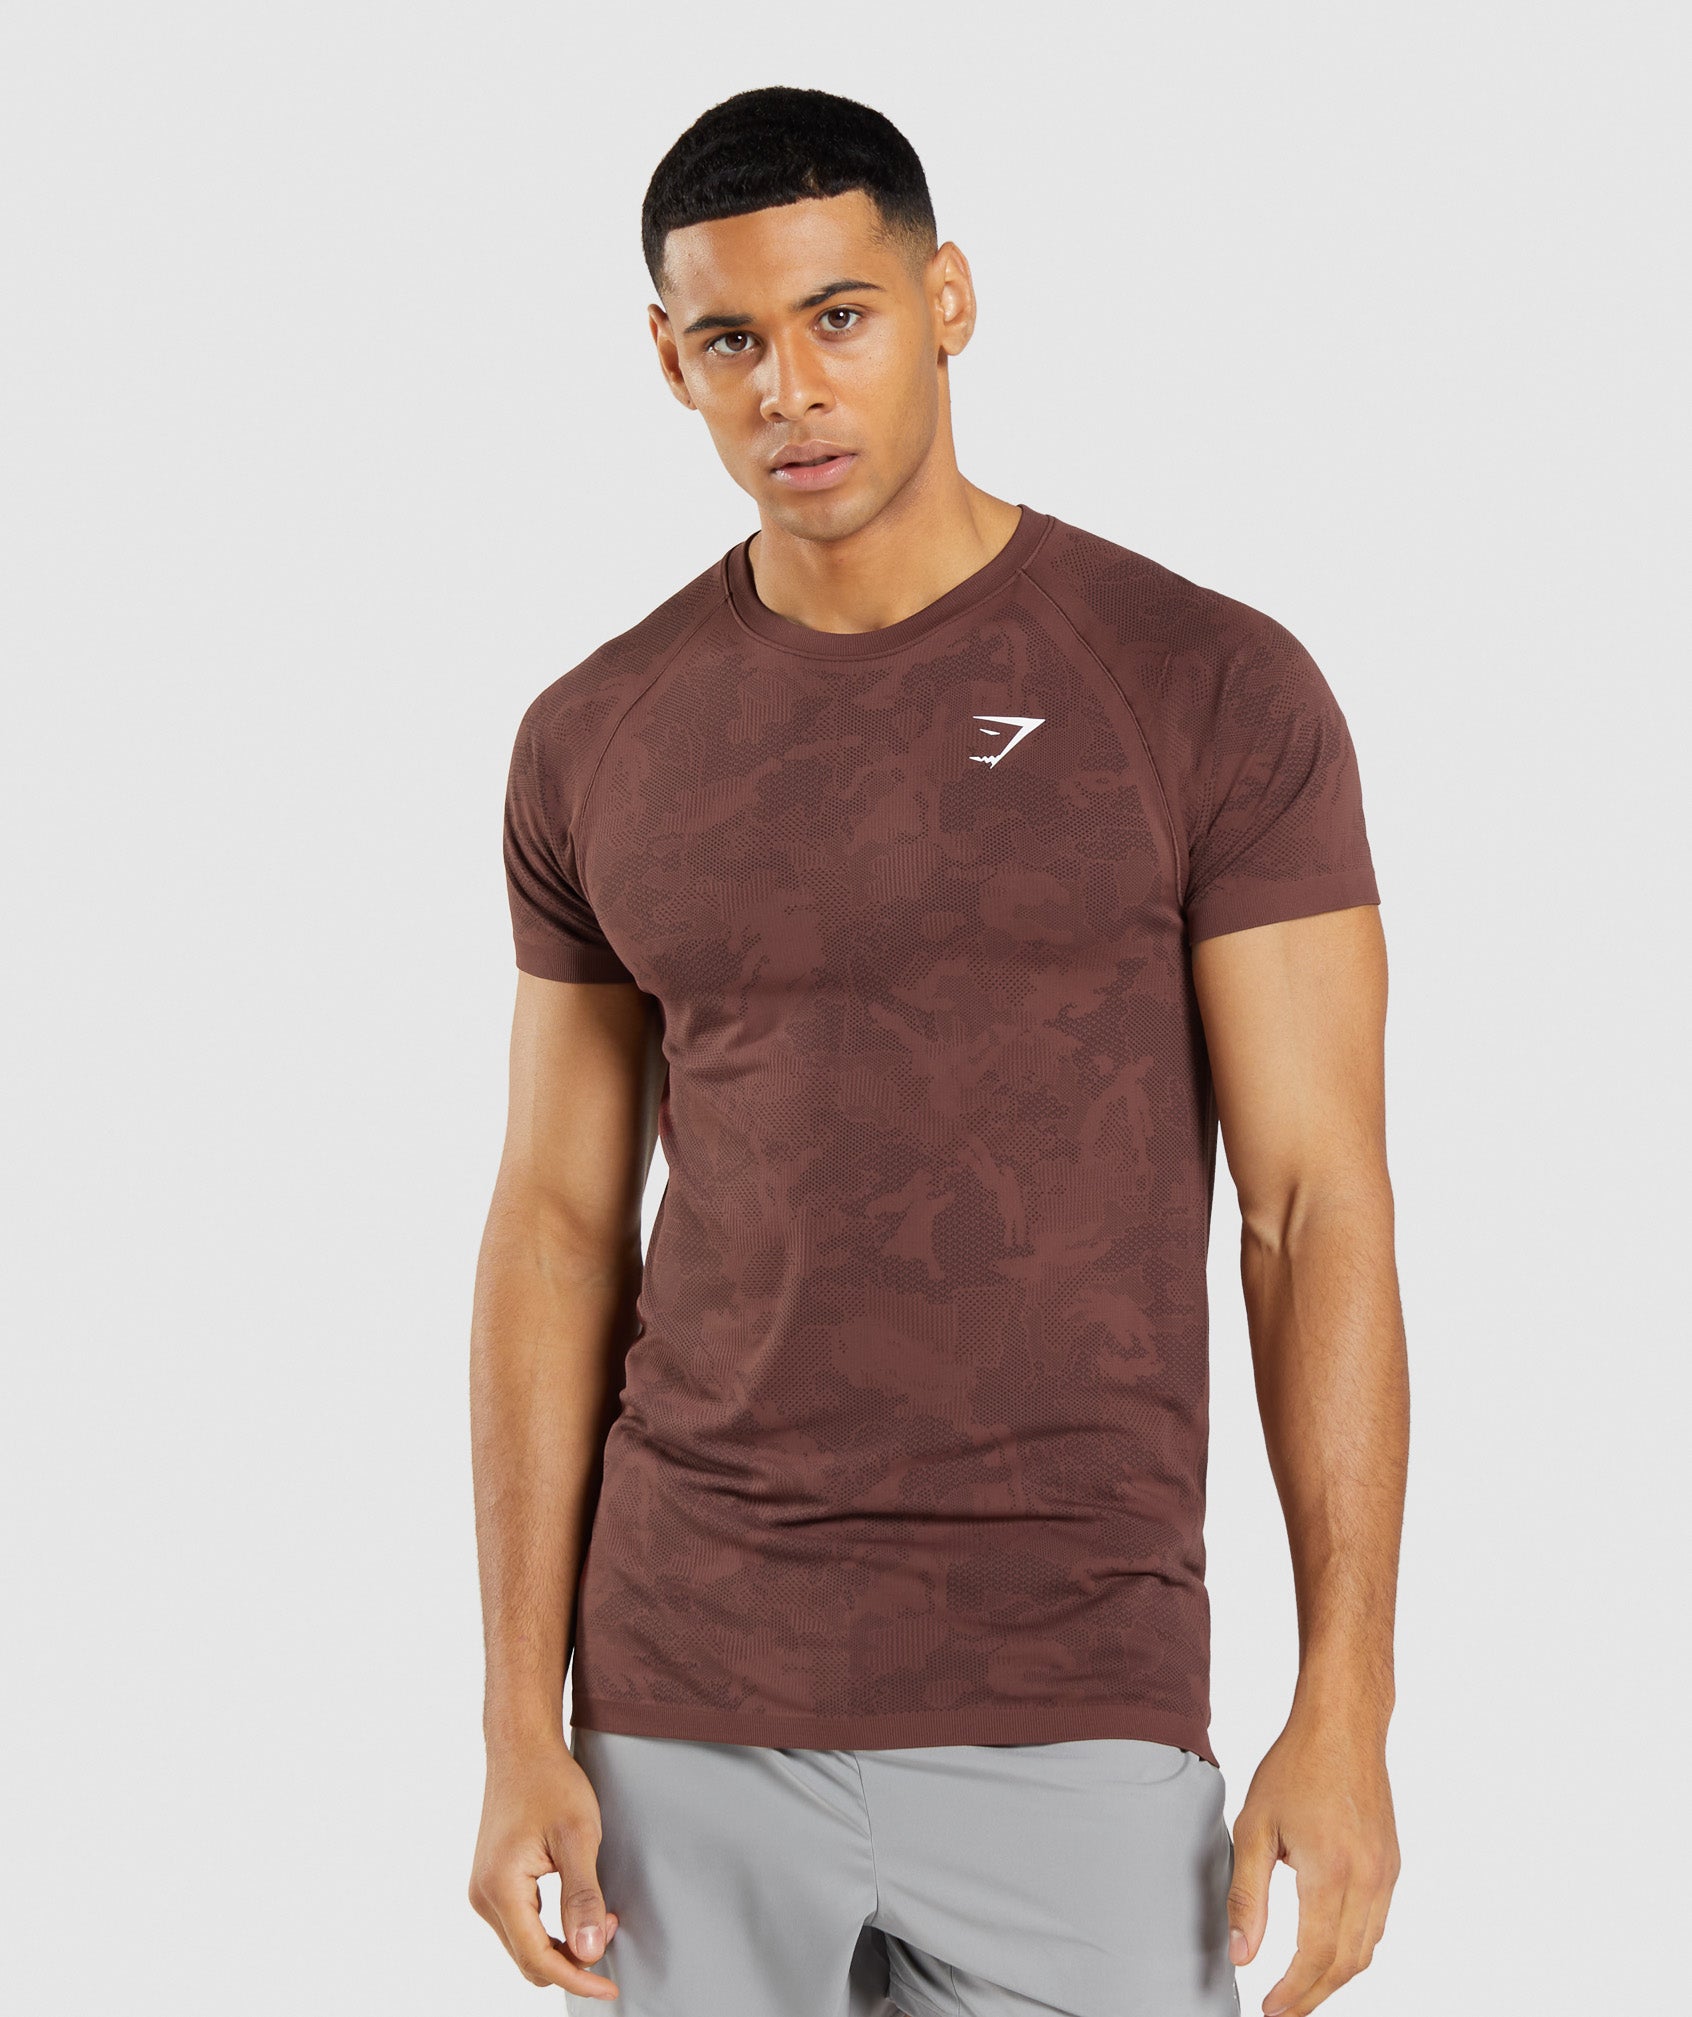 Gymshark Geo Seamless T-Shirt - Cherry Brown/Black